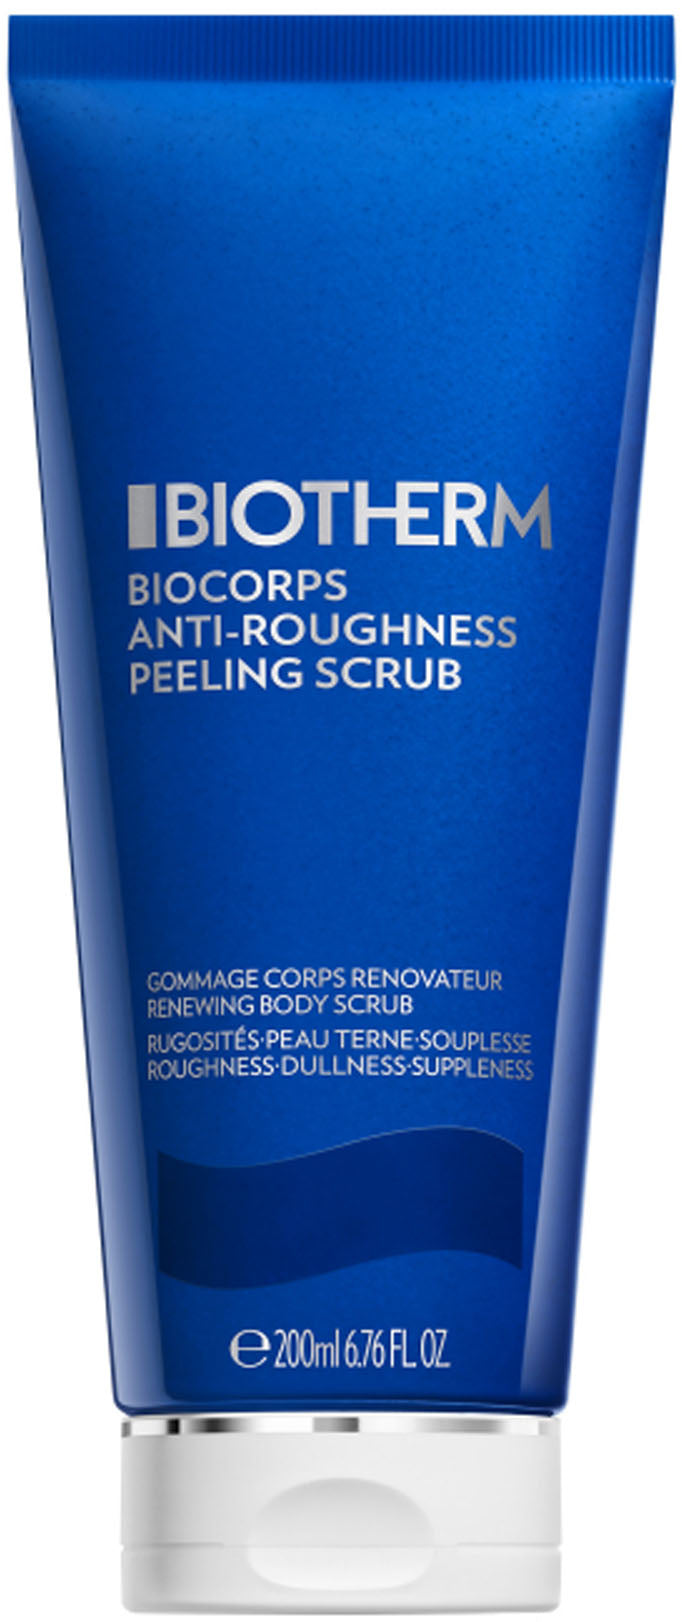 biocorps anti-roughness peeling scrub